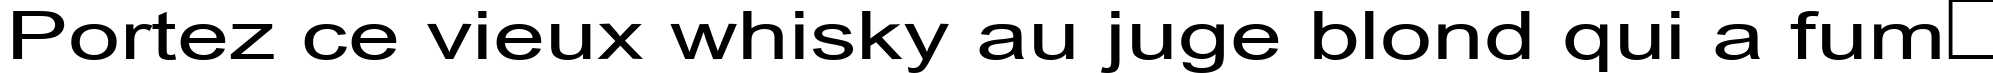 Пример написания шрифтом Arial Cyr140n текста на французском